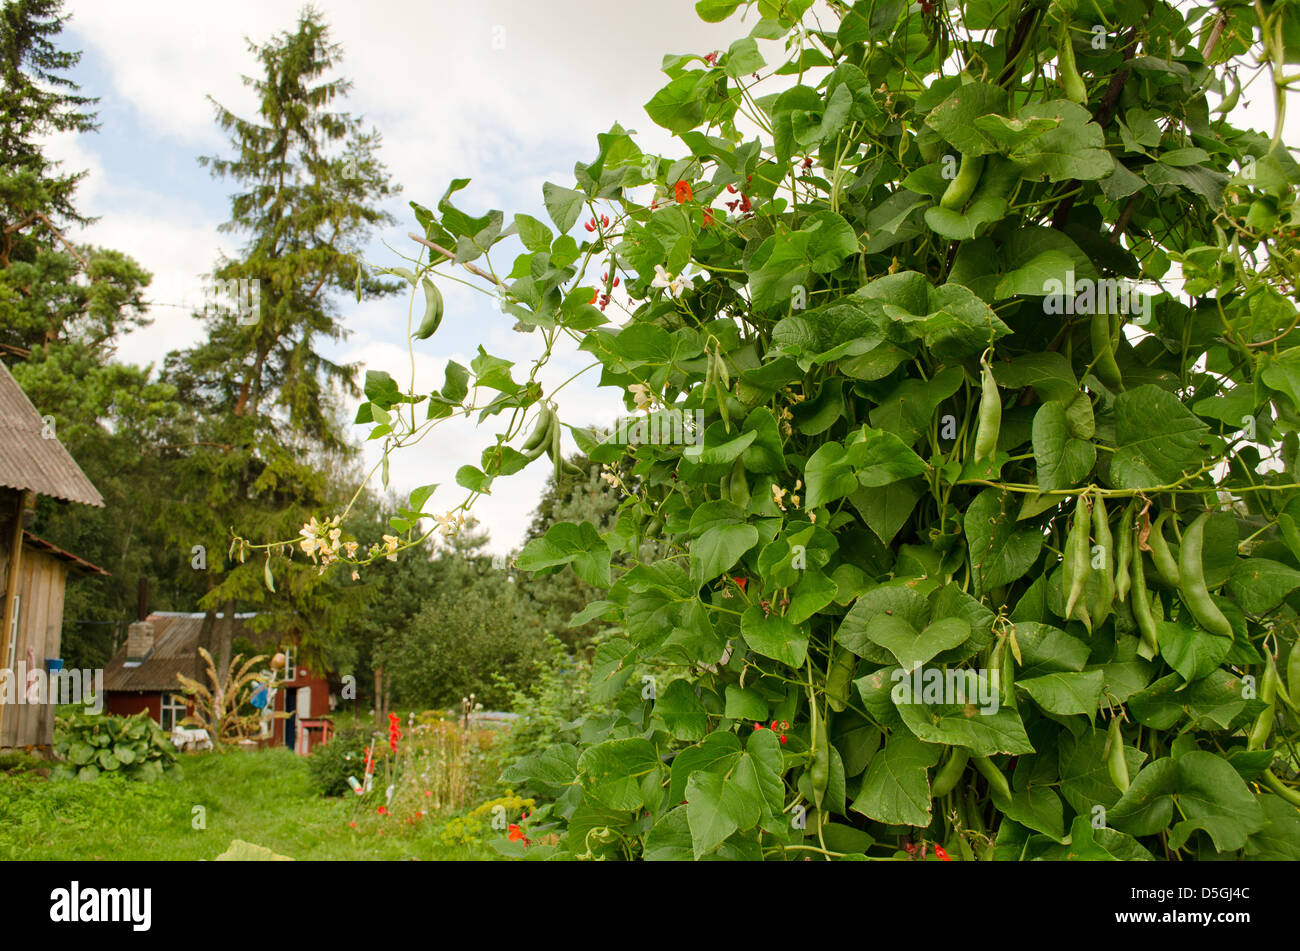 bean legume bush with blooms grow in rural homestead house garden. Stock Photo